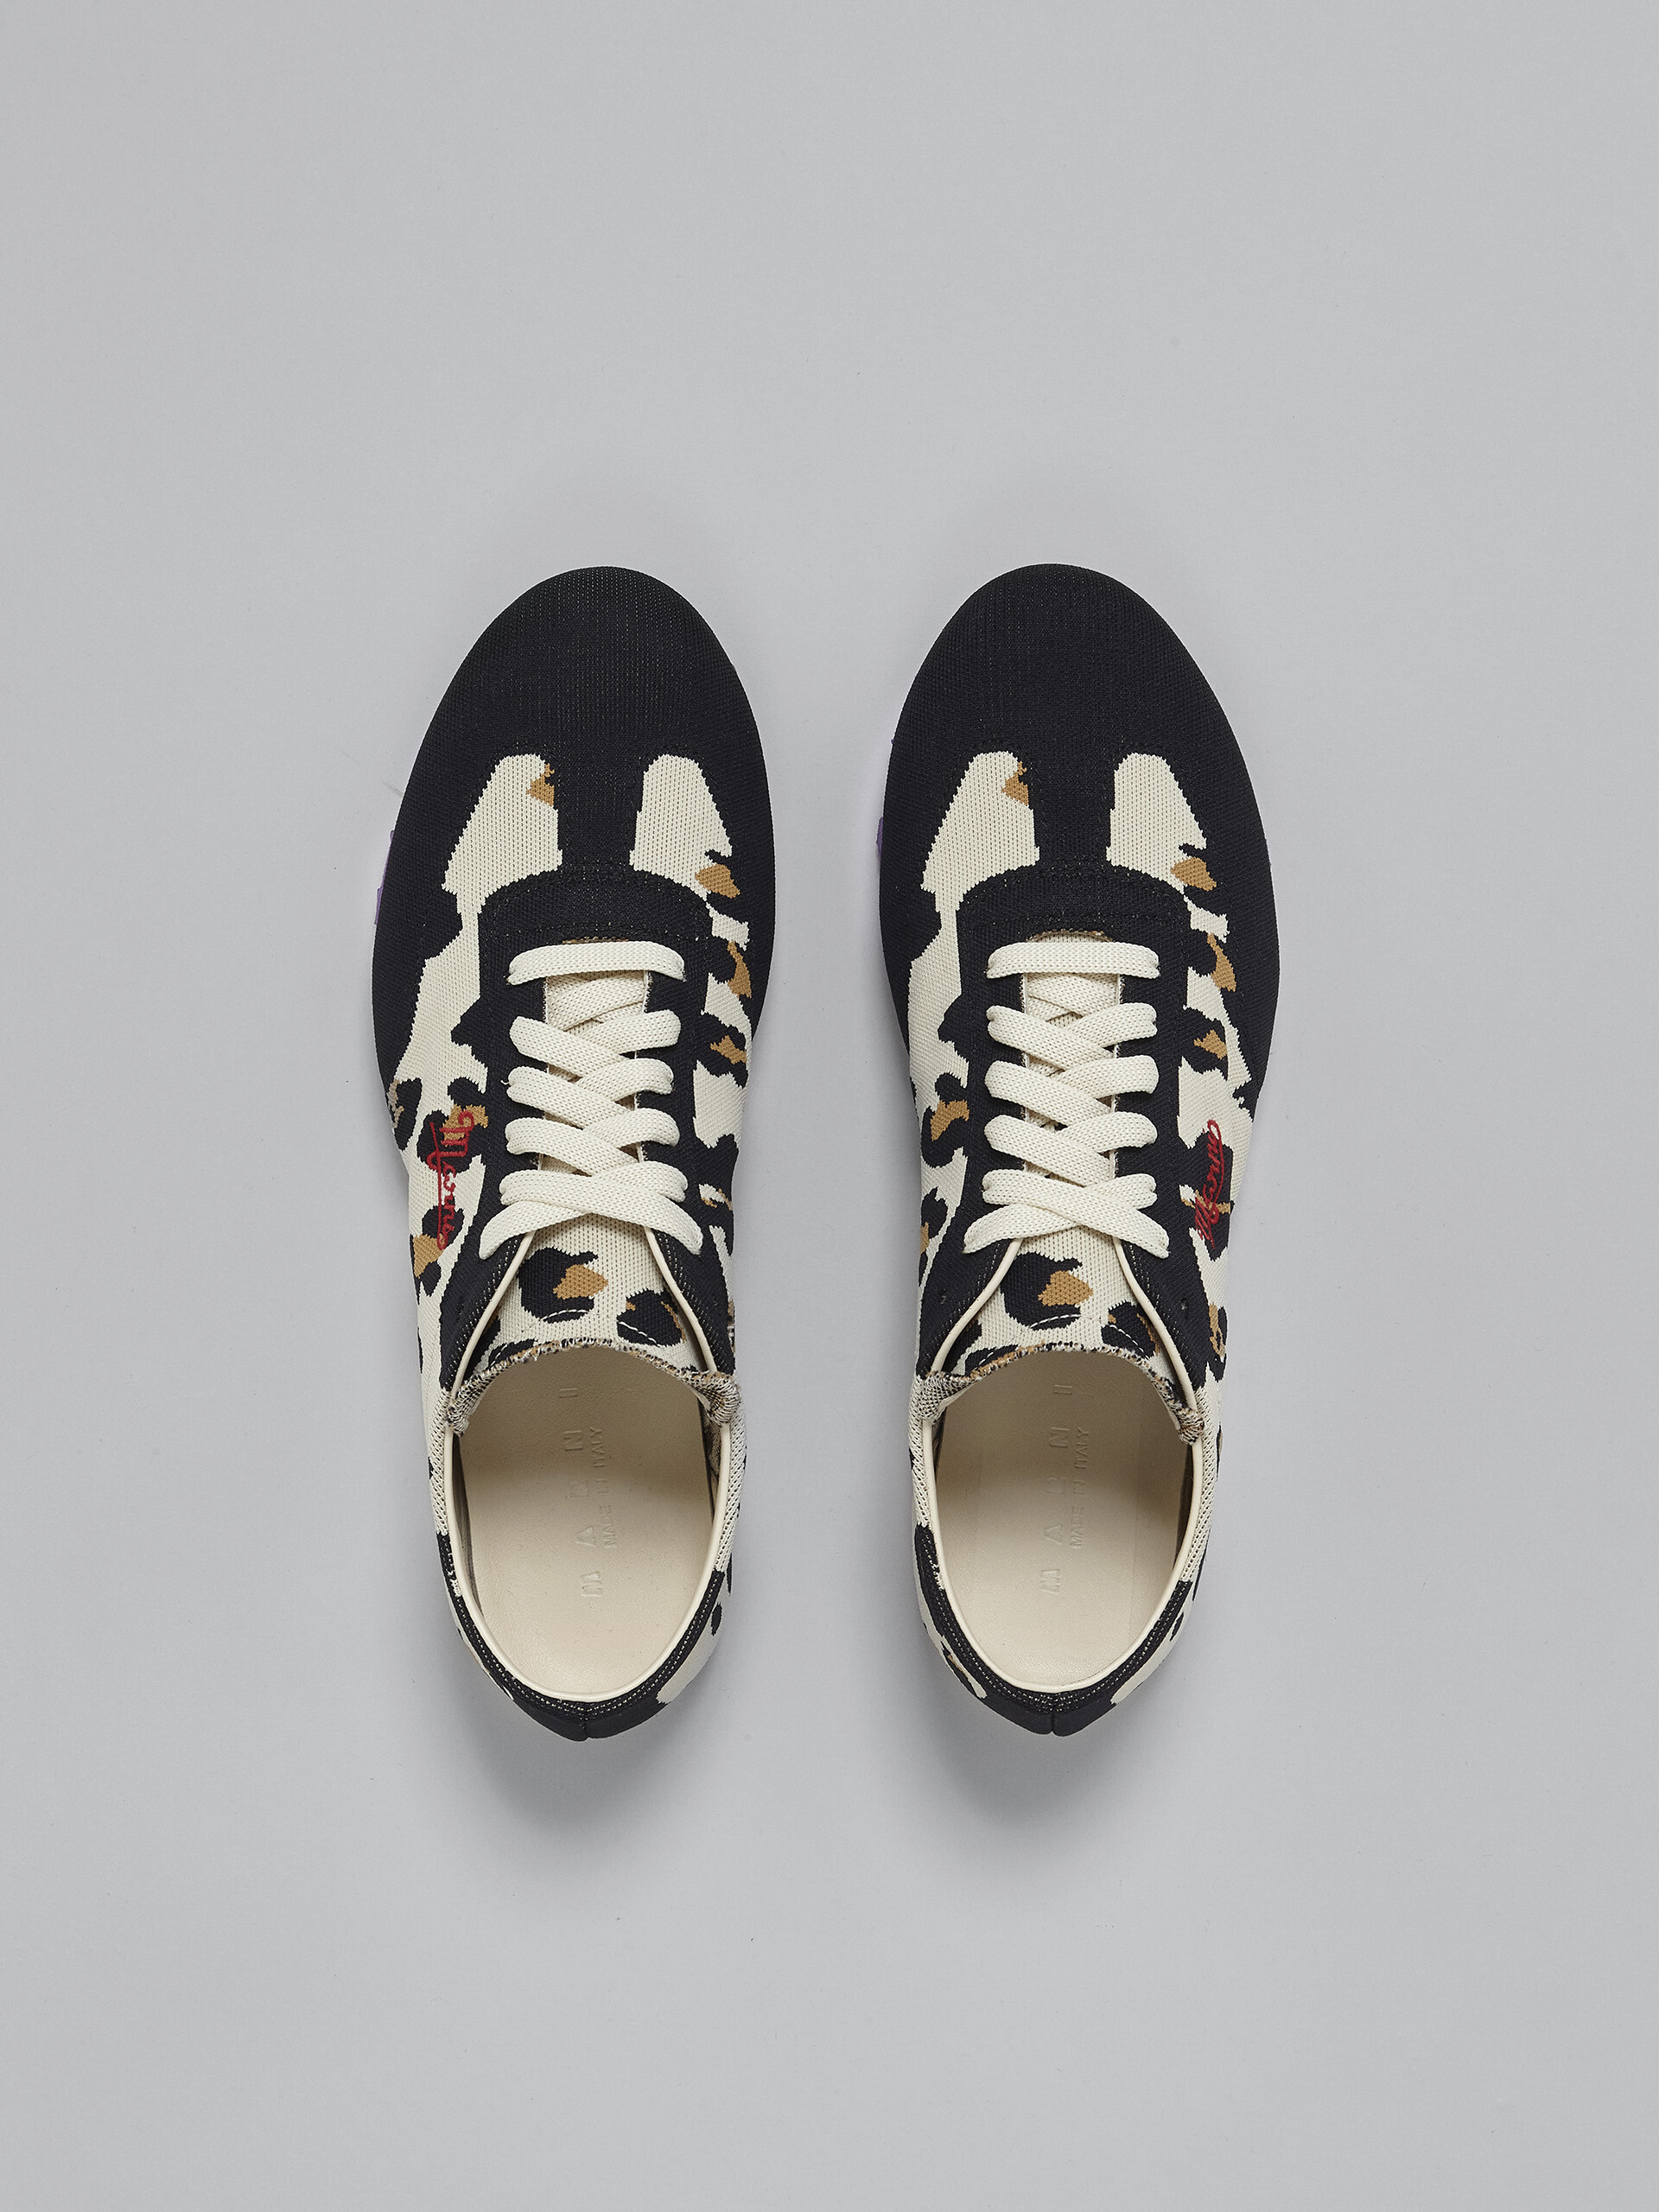 Sneaker PEBBLE in jacquard elastico stampa leopardo - Sneakers - Image 4